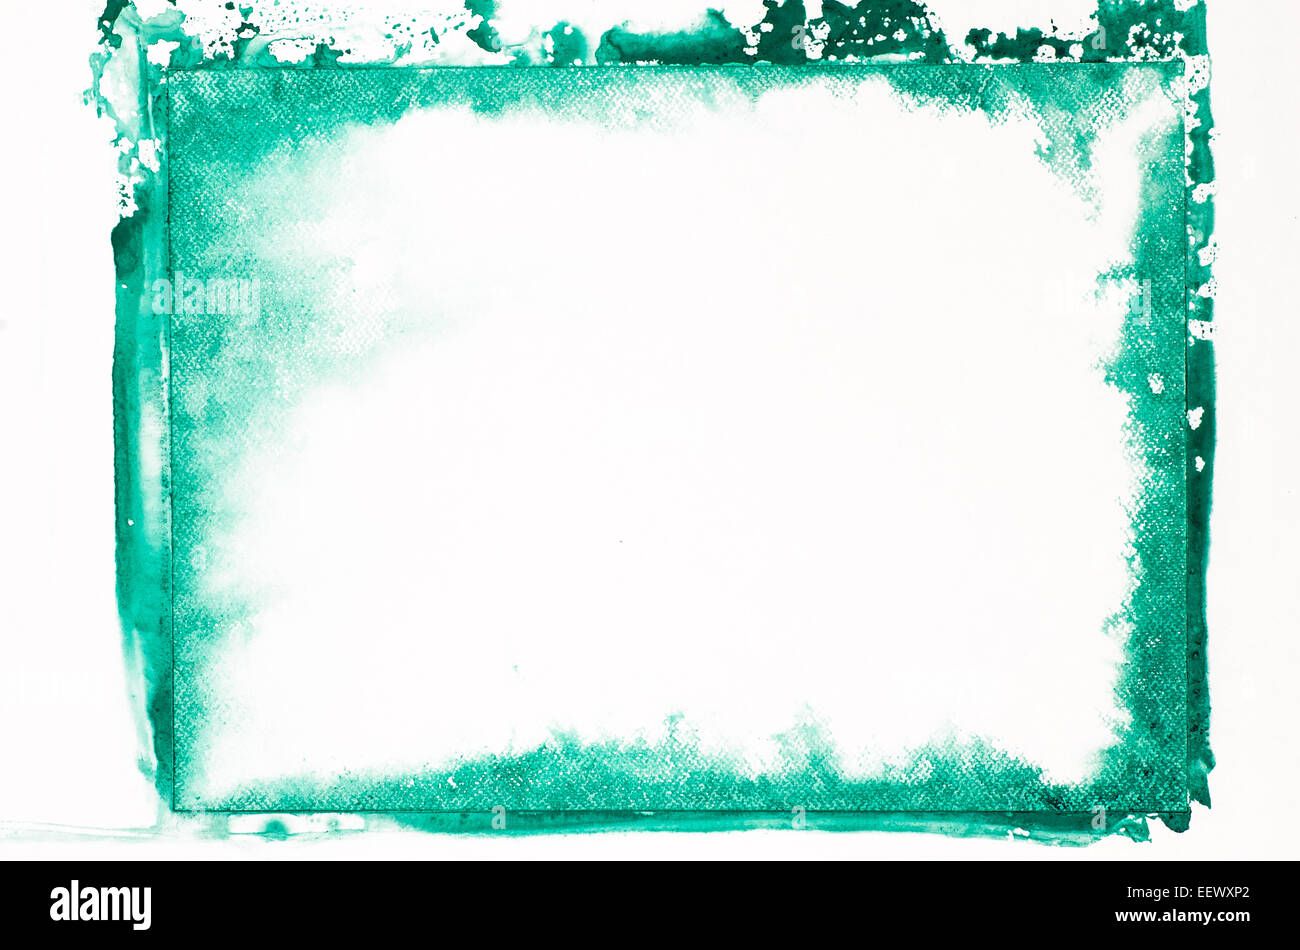 grüne Aquarellmalerei Hintergrundtextur Stockfoto